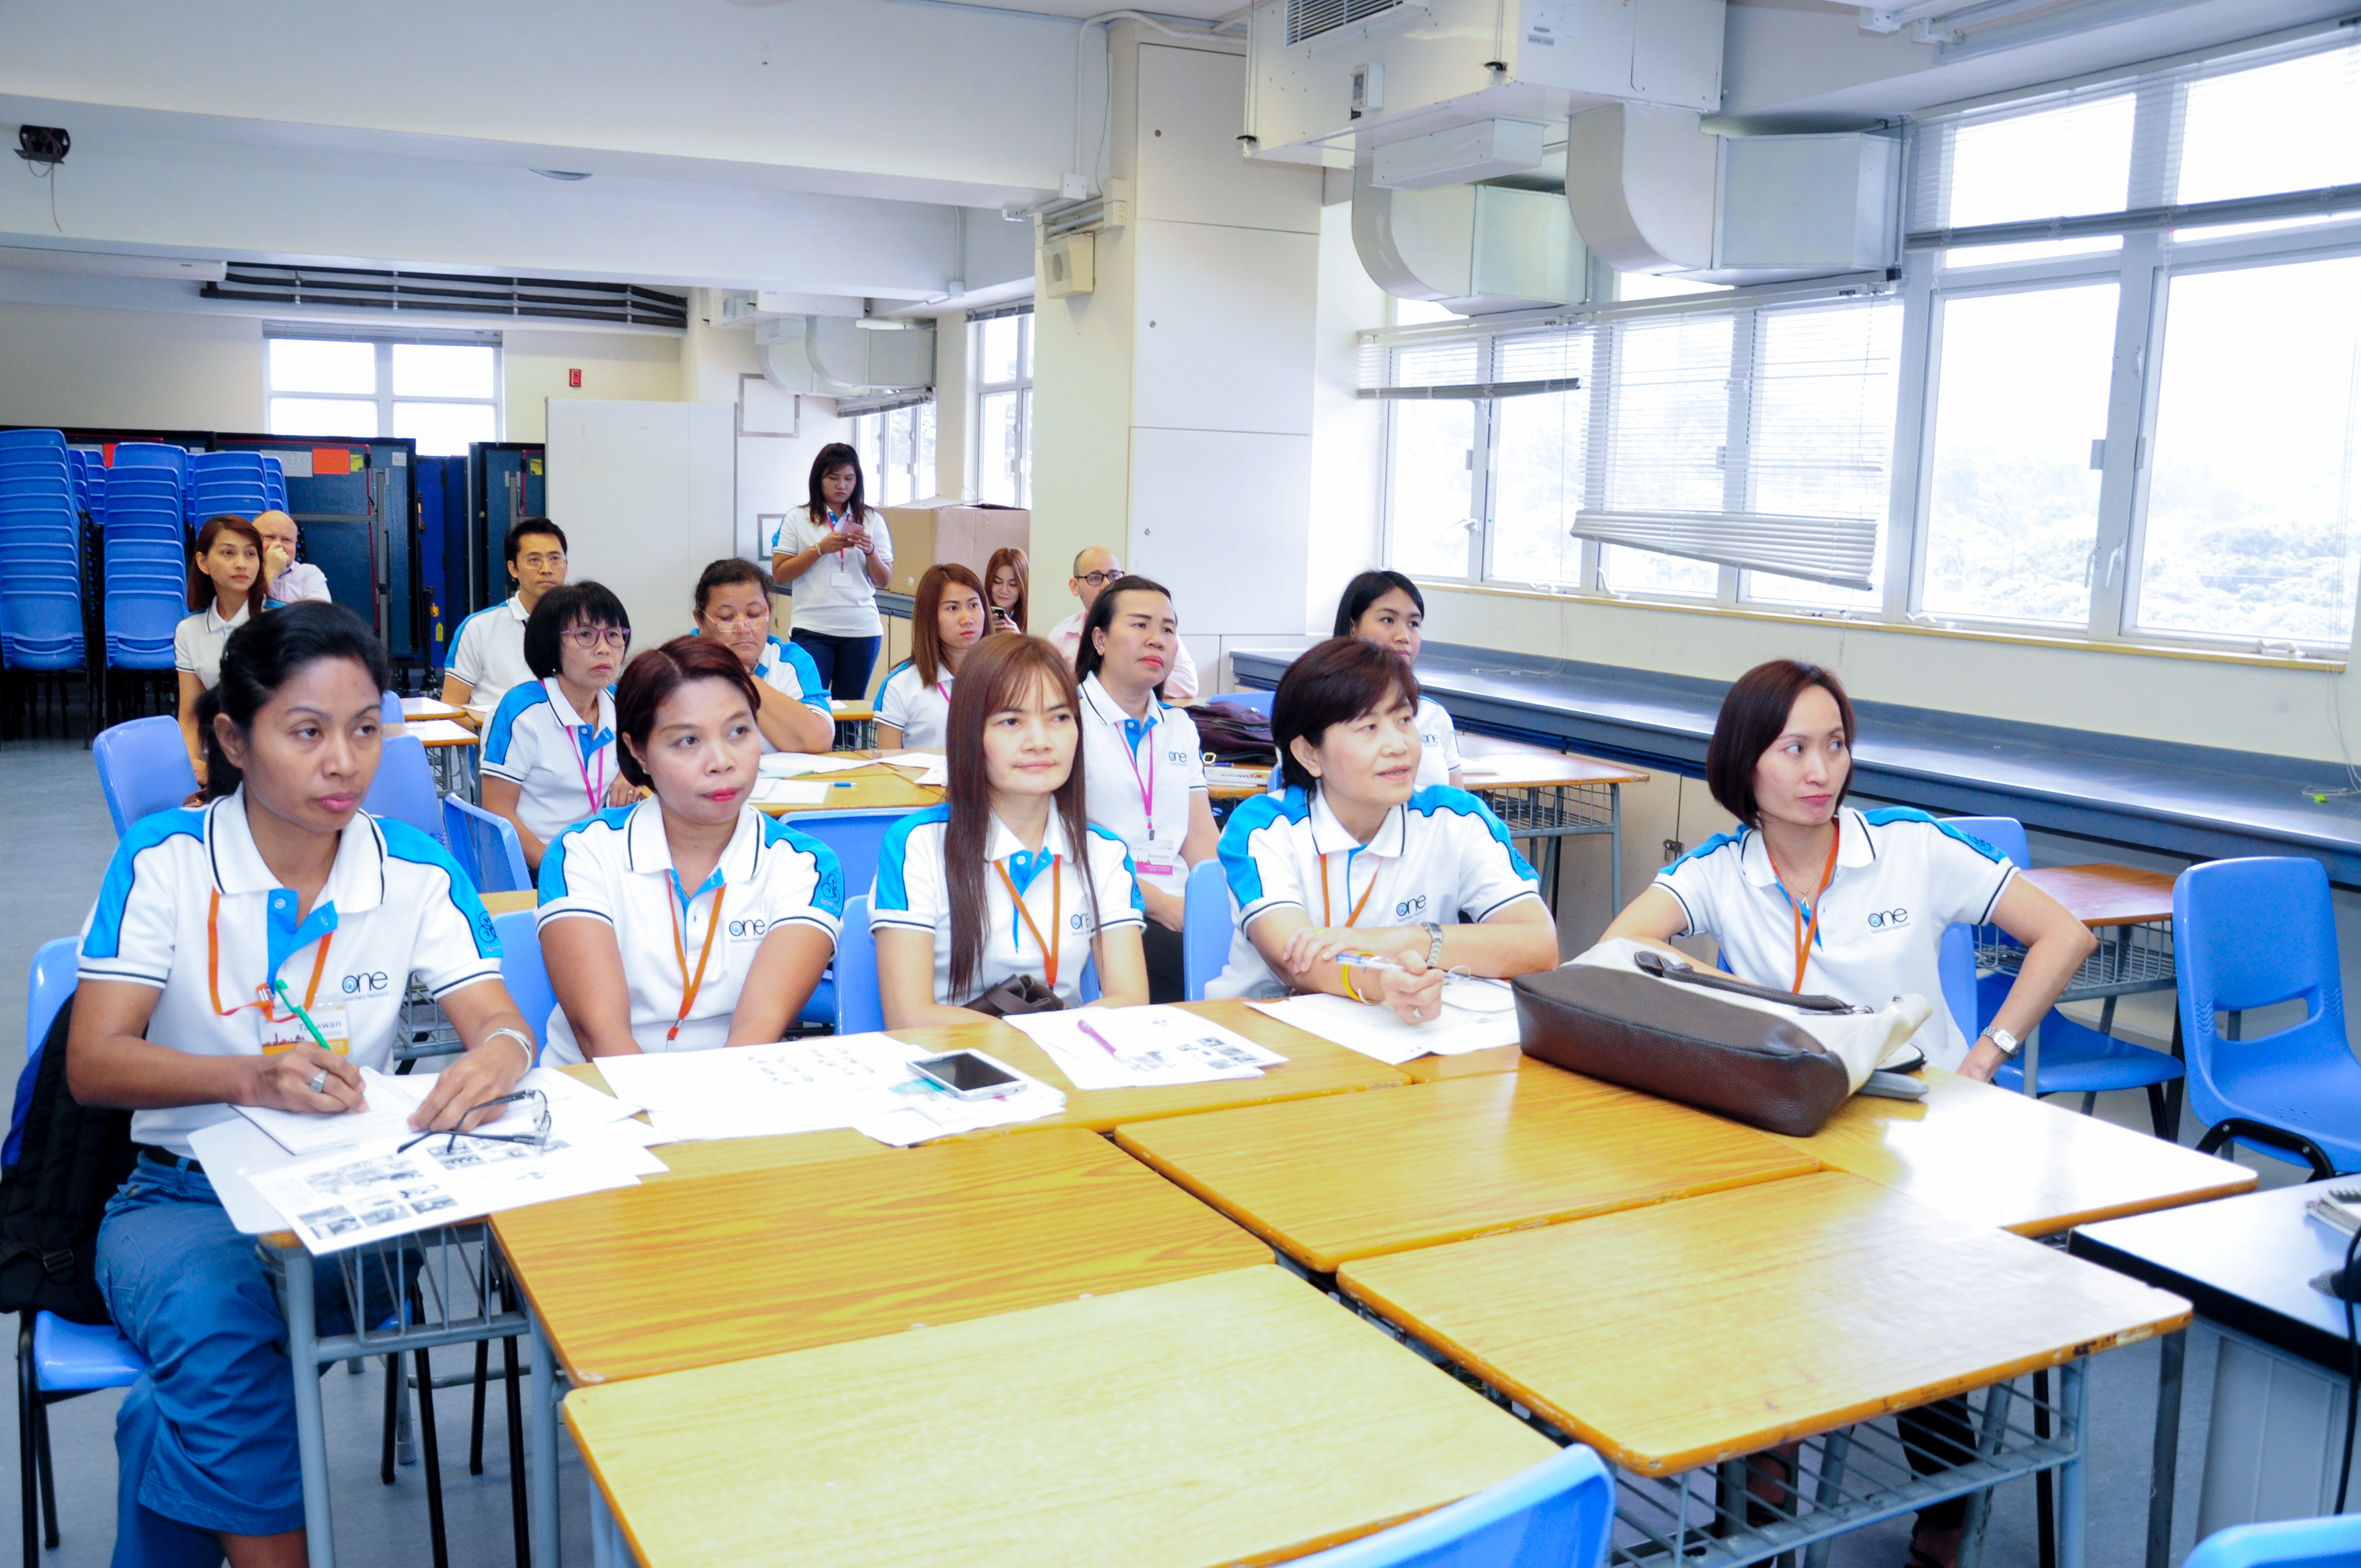 Thai Watana Panich Teachers Education Field Trip” ครั้งที่ 5 ณ YMCA OF HONG KONG CHRISTIAN COLLEGE (YHKCC)